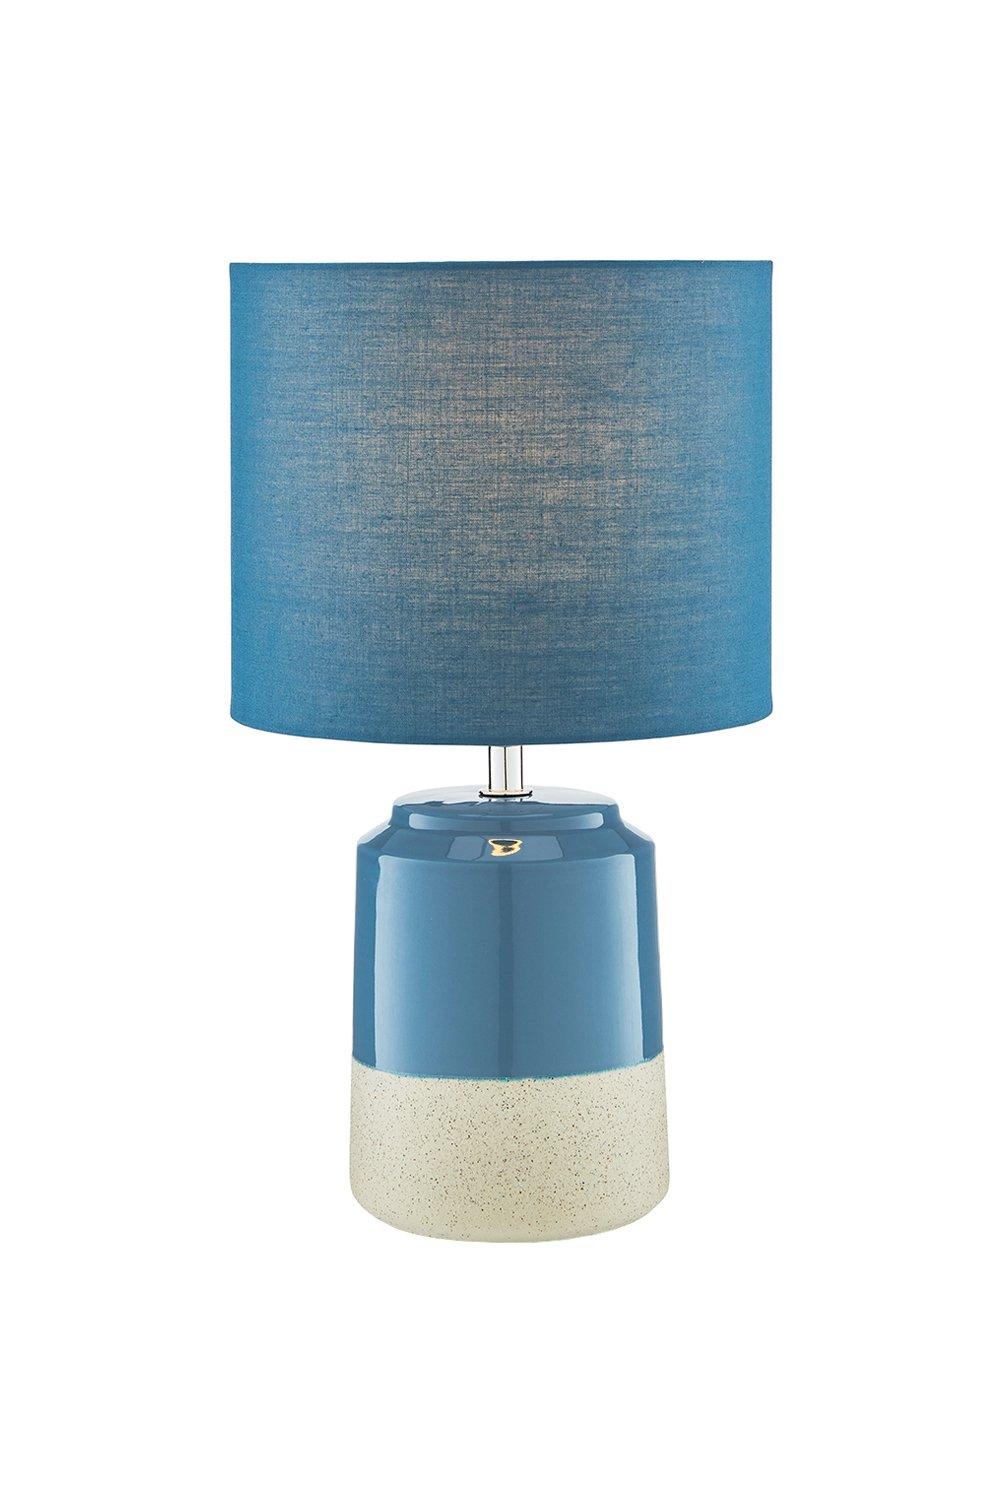 'Pop' Table Lamp Denim Blue